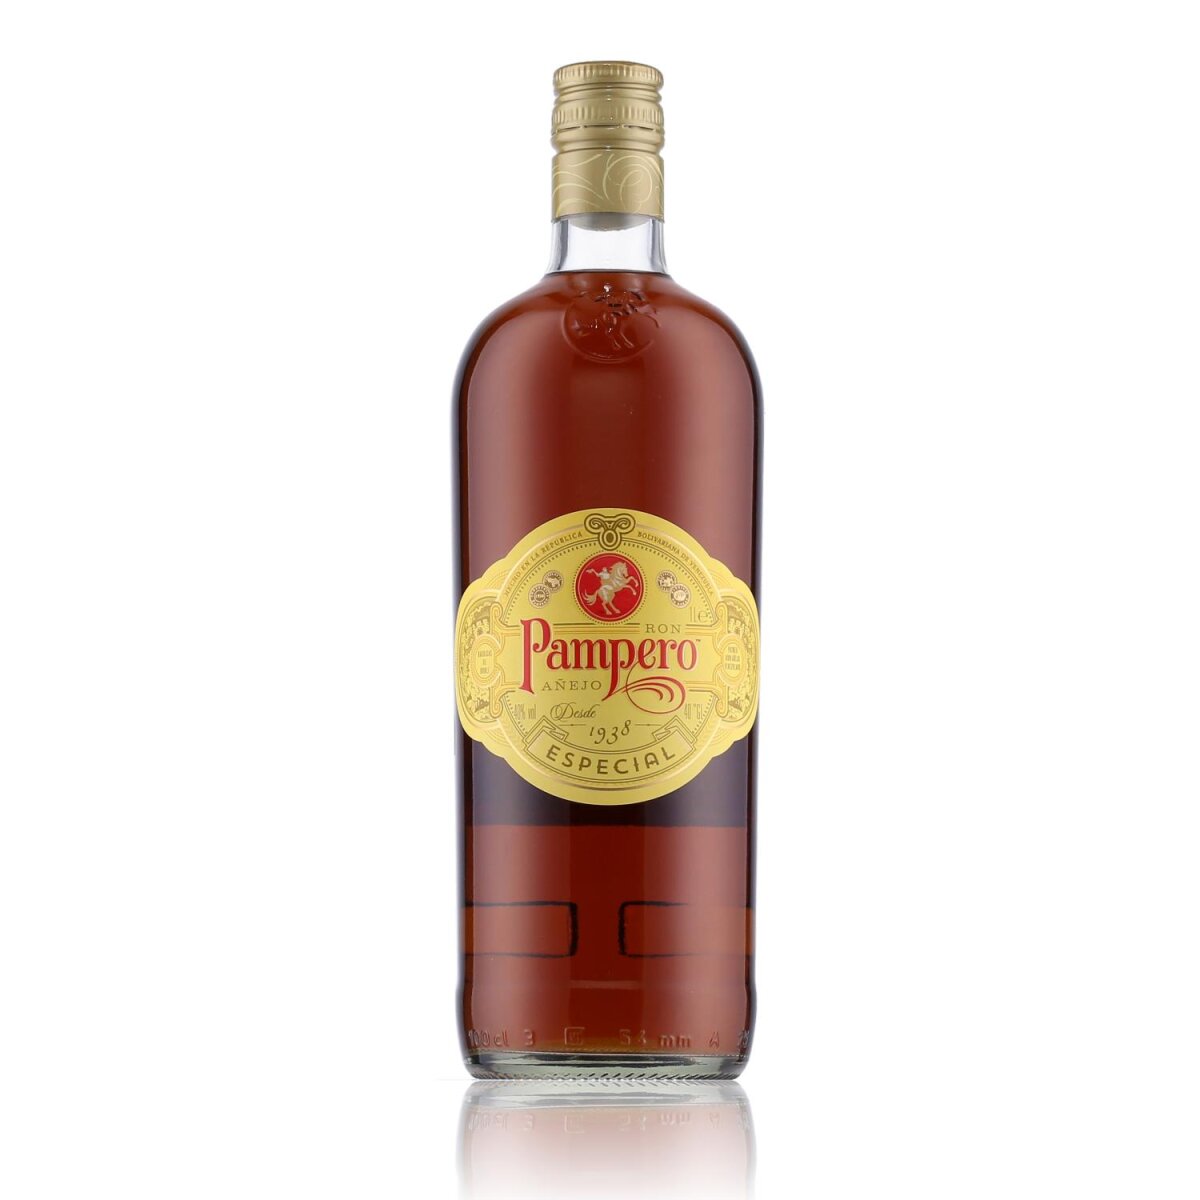 Vol. 40% Rum Pampero 1l, Añejo Especial 16,49 €